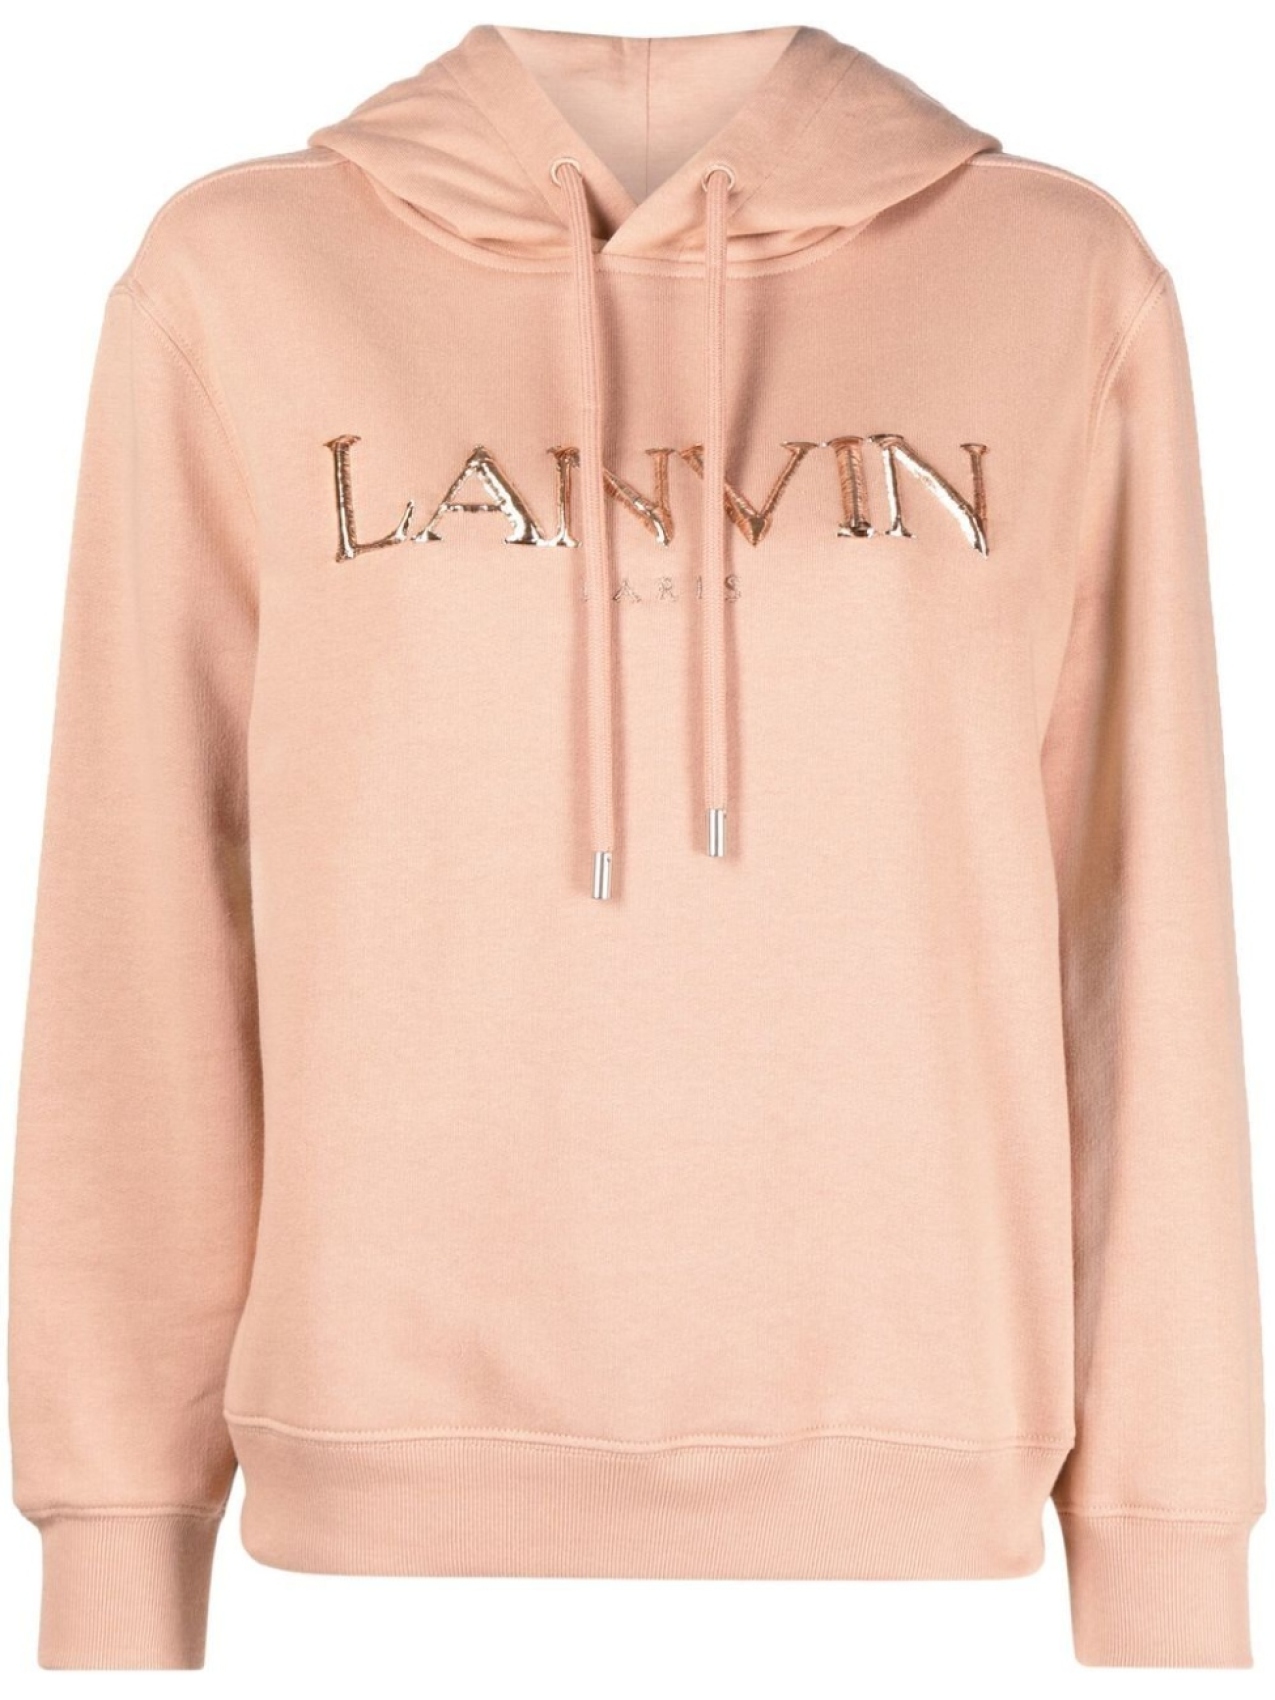 Lanvin худи с логотипом, розовый